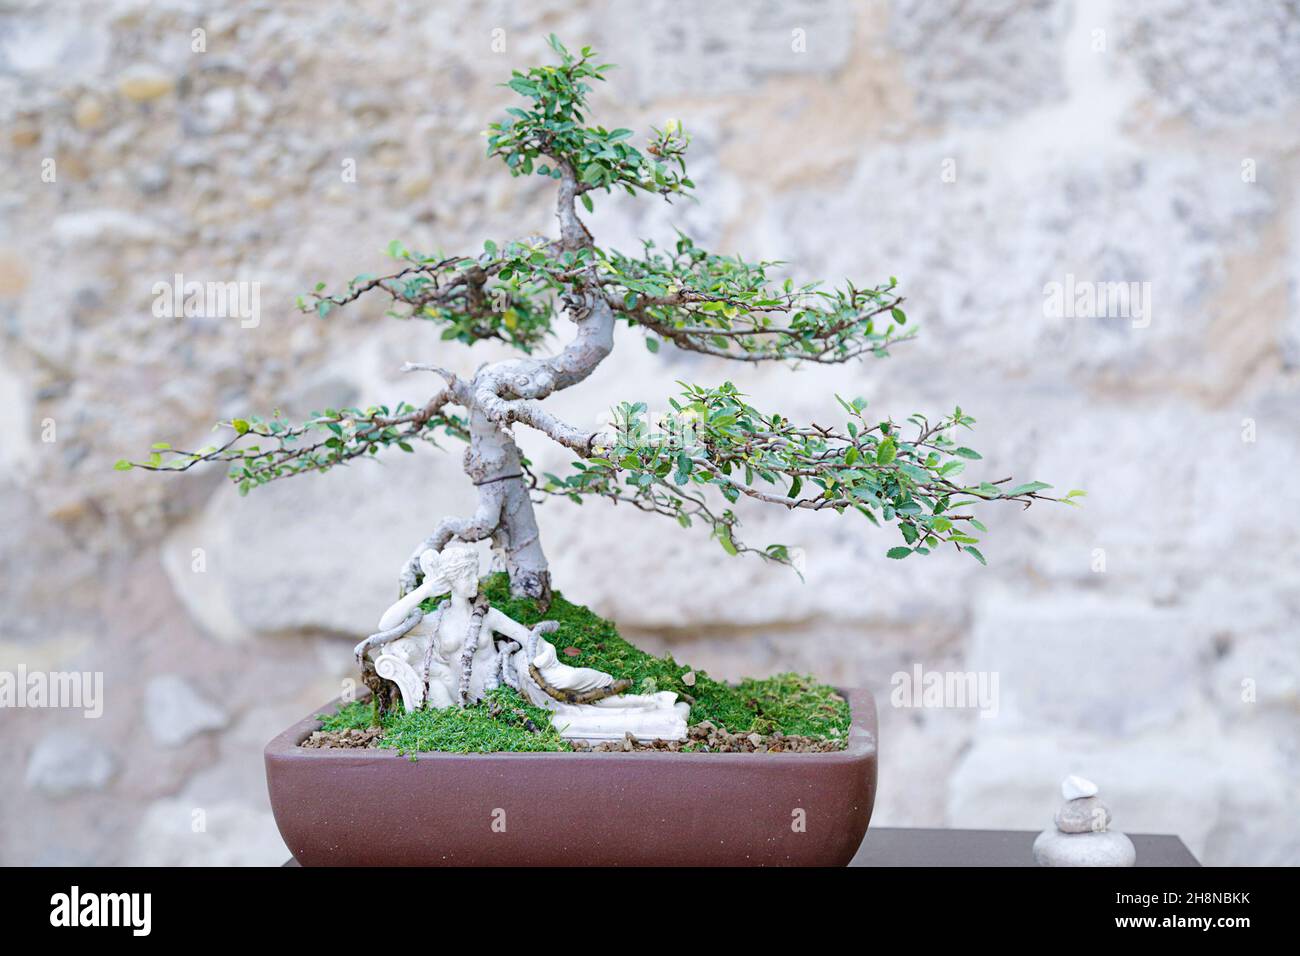 Ulmus parvifolia (Chinese elm) bonsai tree against a stone wall Stock Photo